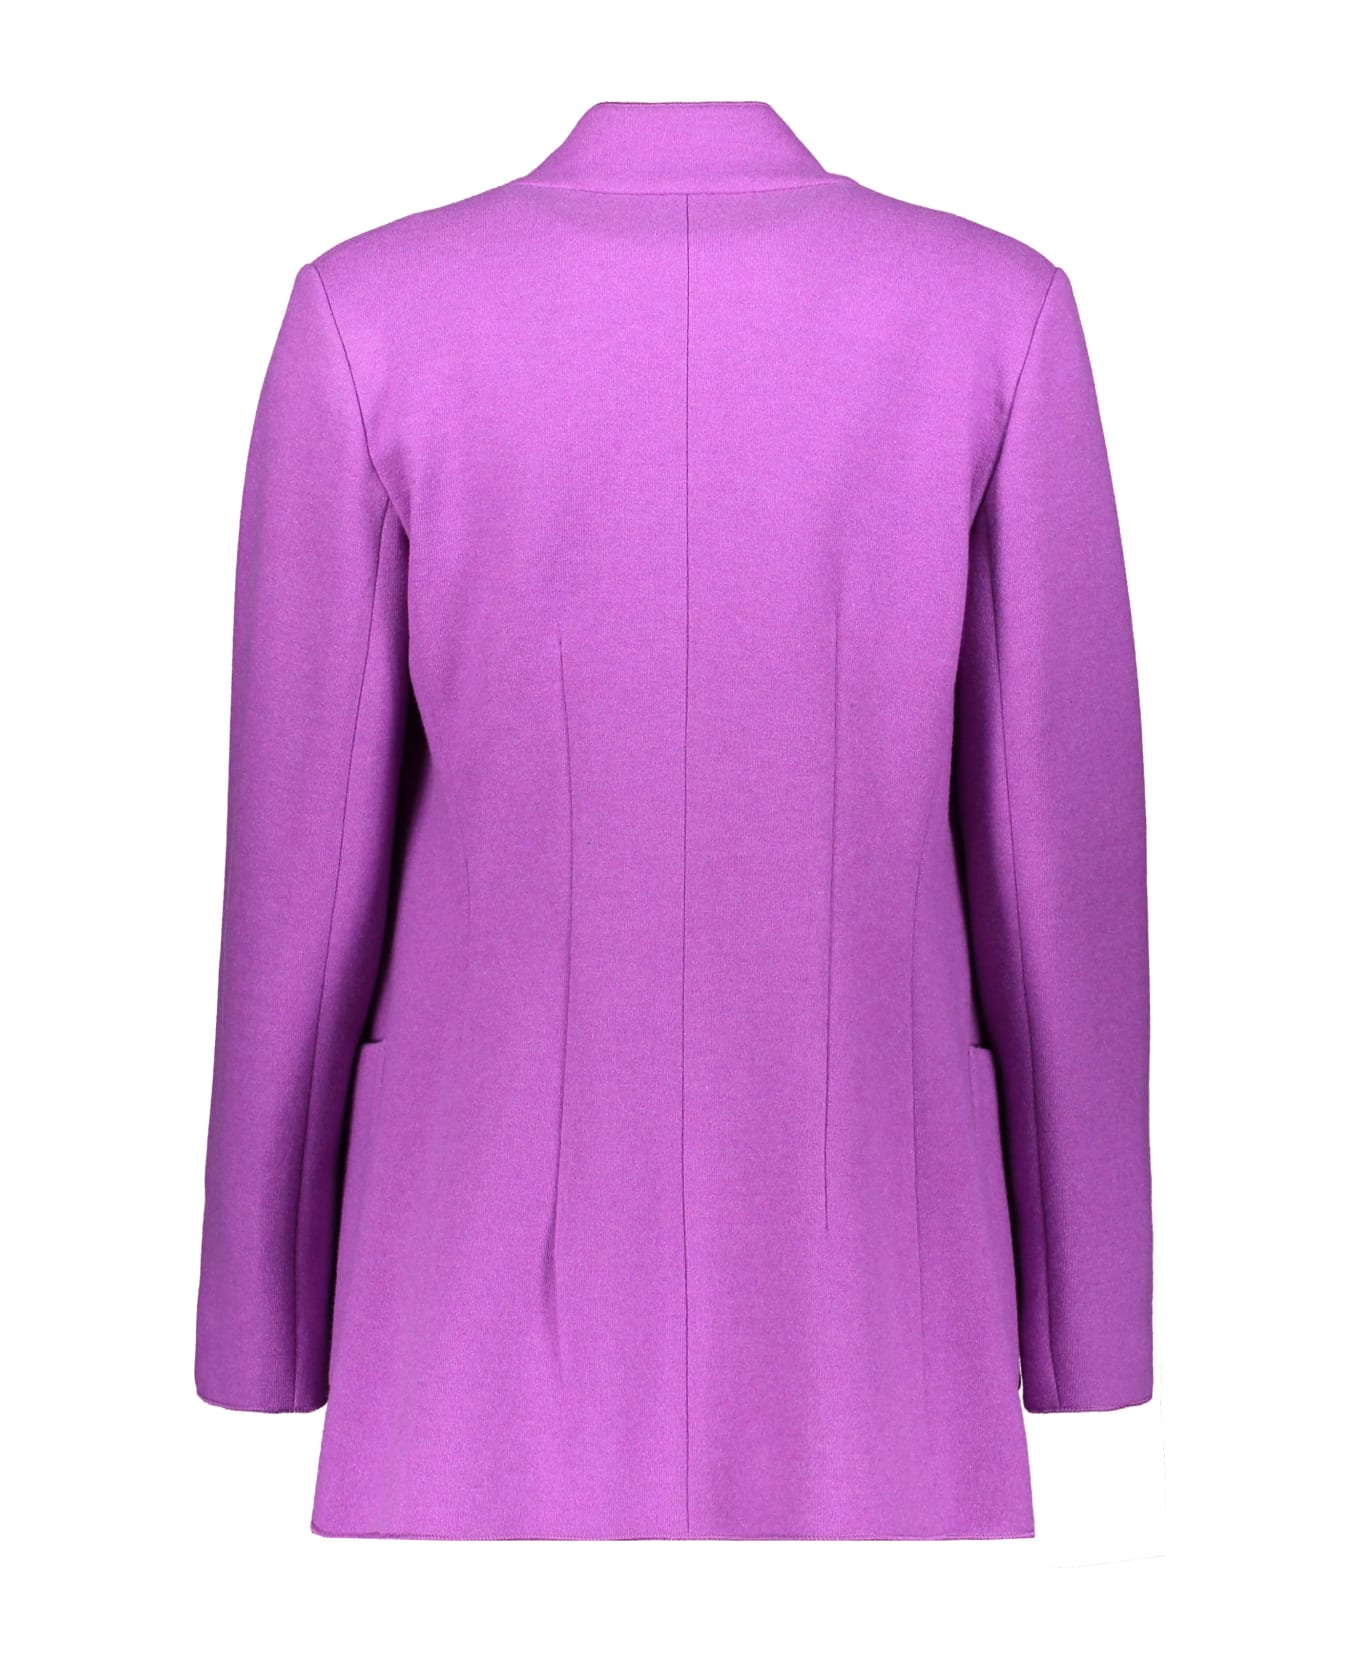 Agnona Cashmere Jacket - purple